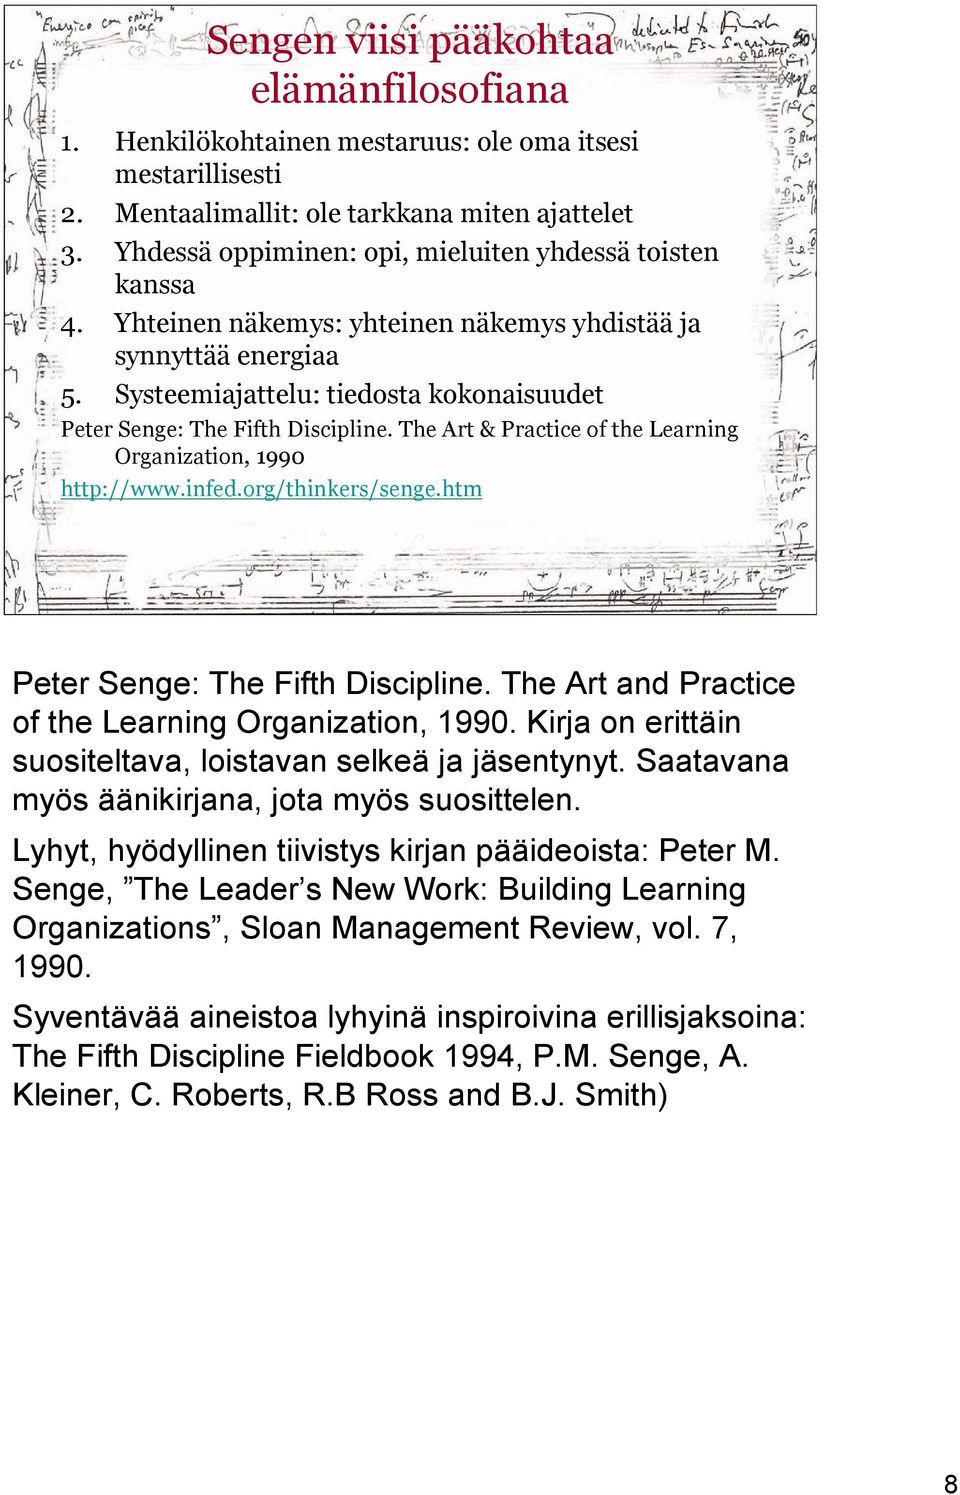 Systeemiajattelu: tiedosta kokonaisuudet Peter Senge: The Fifth Discipline. The Art & Practice of the Learning Organization, 1990 http://www.infed.org/thinkers/senge.